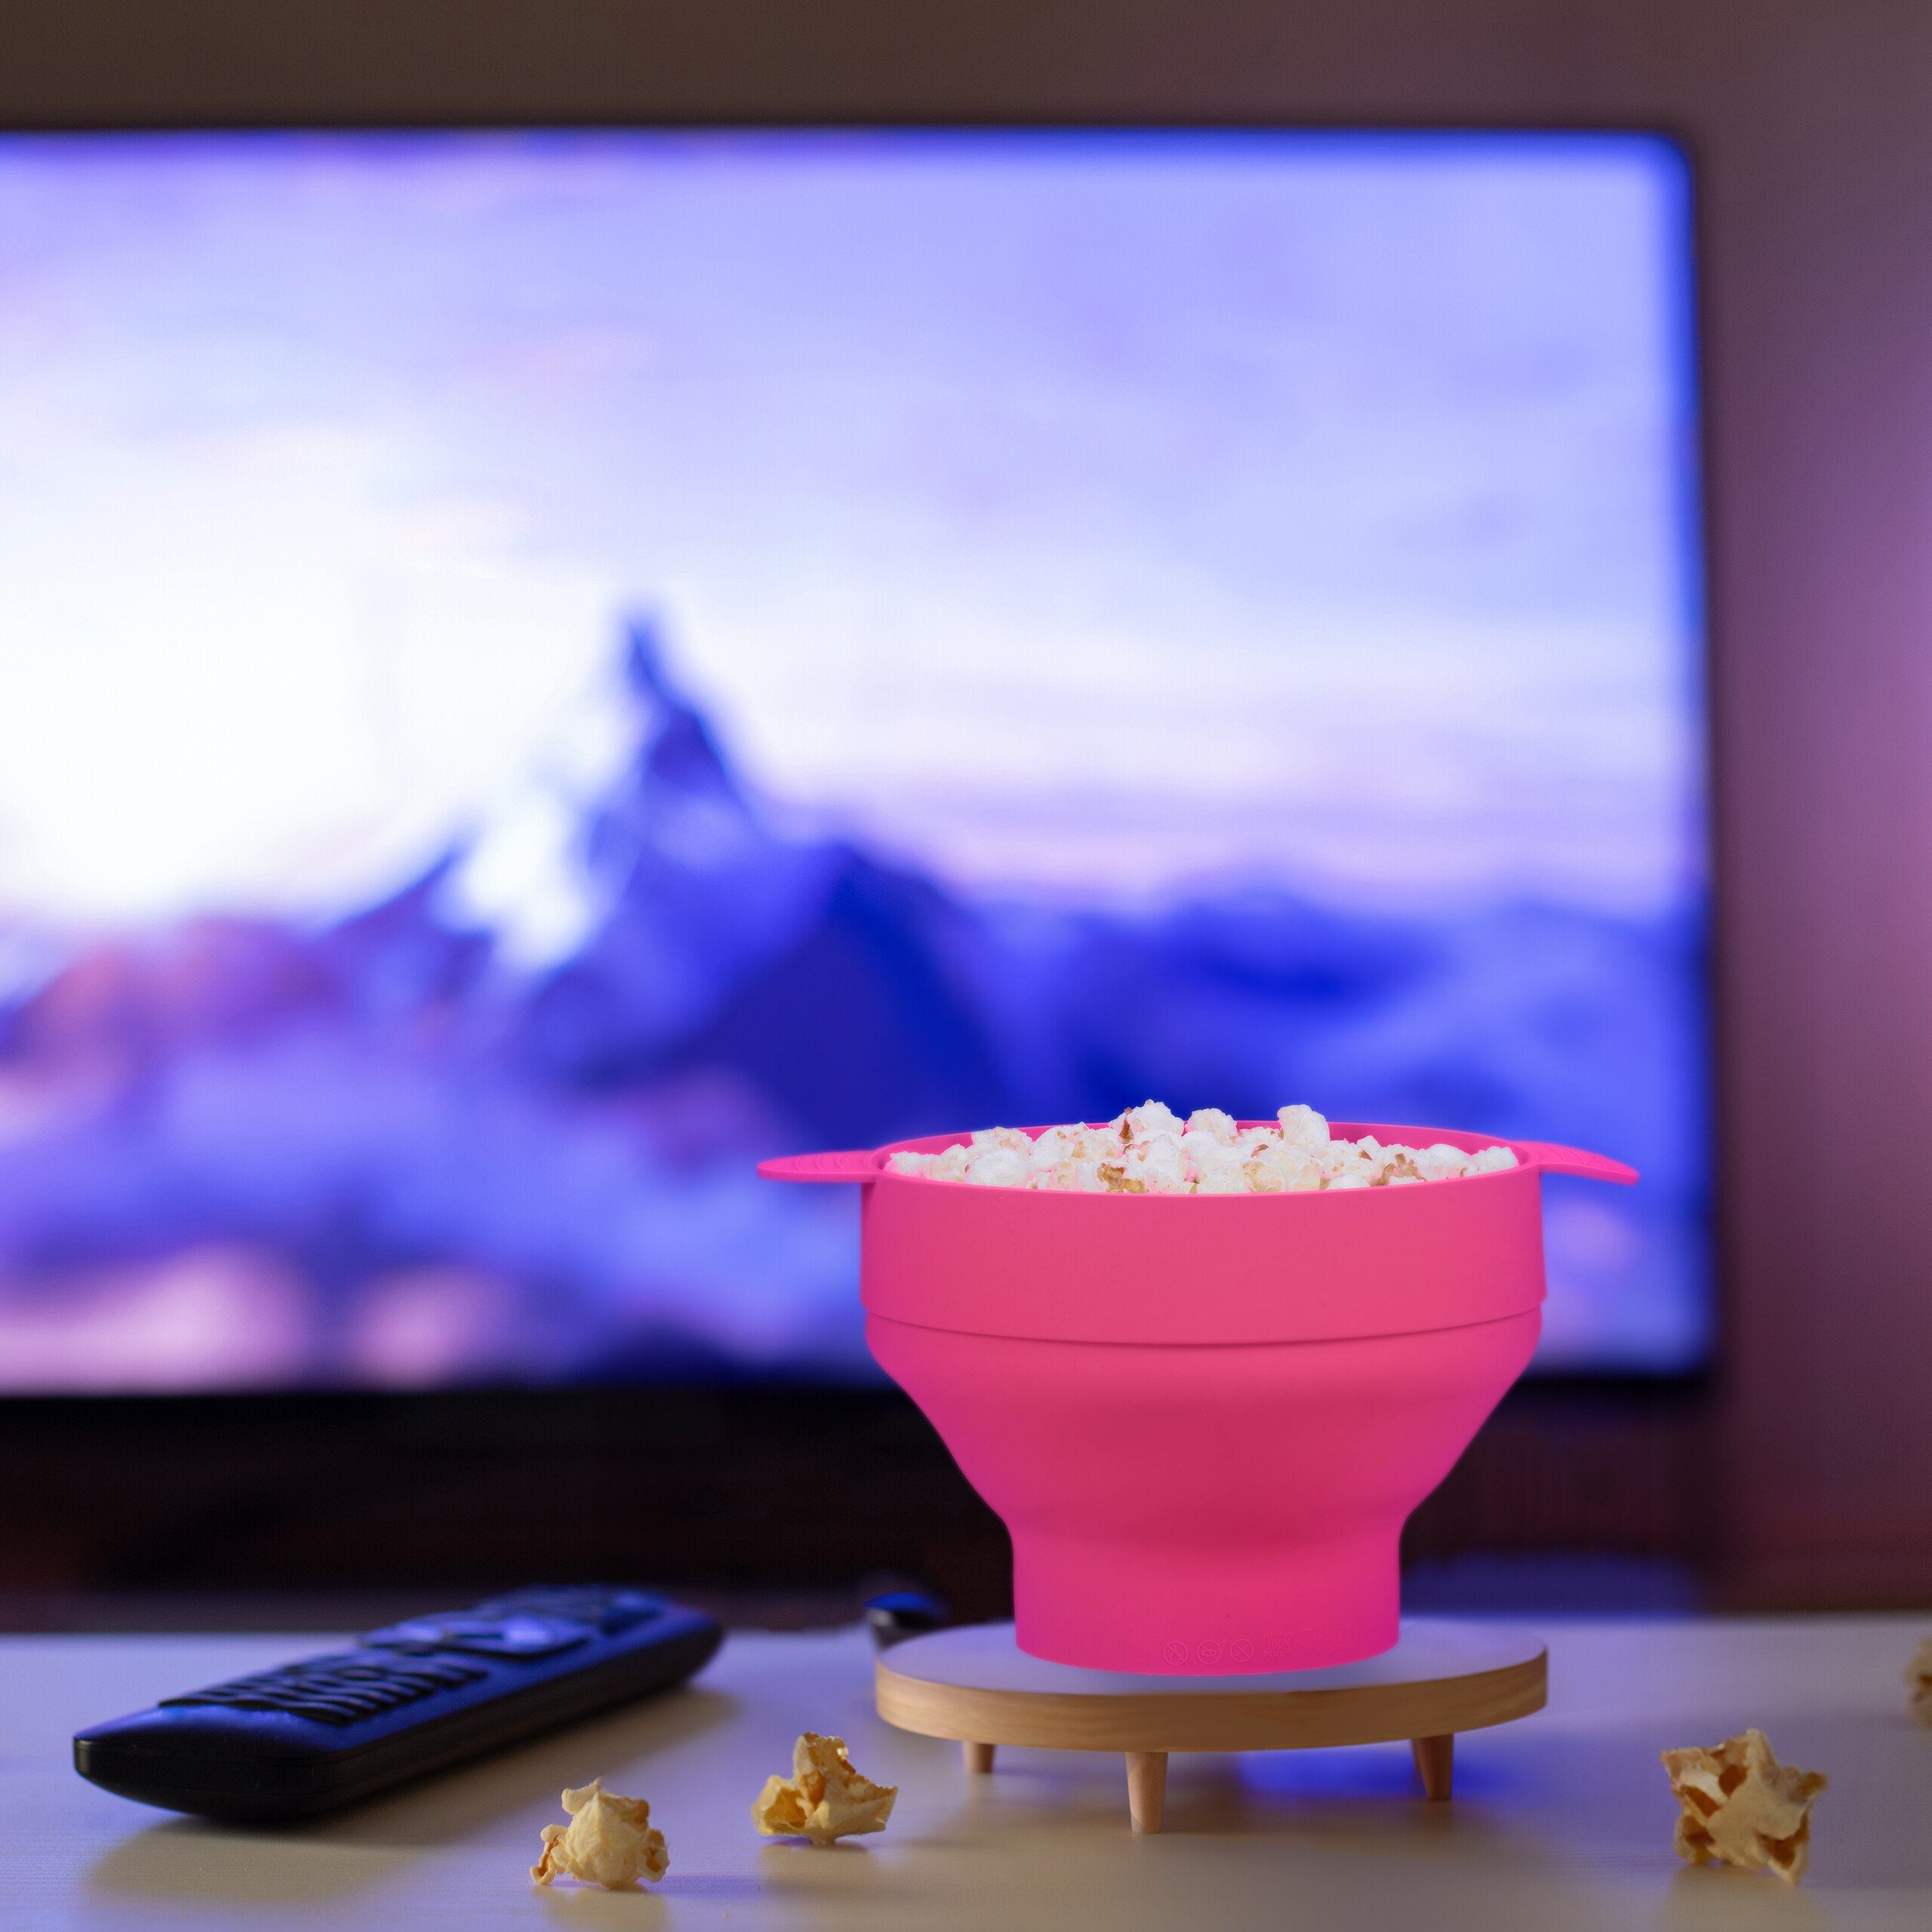 relaxdays Schüssel Popcorn Transparent für Mikrowelle, Pink Maker Pink Silikon